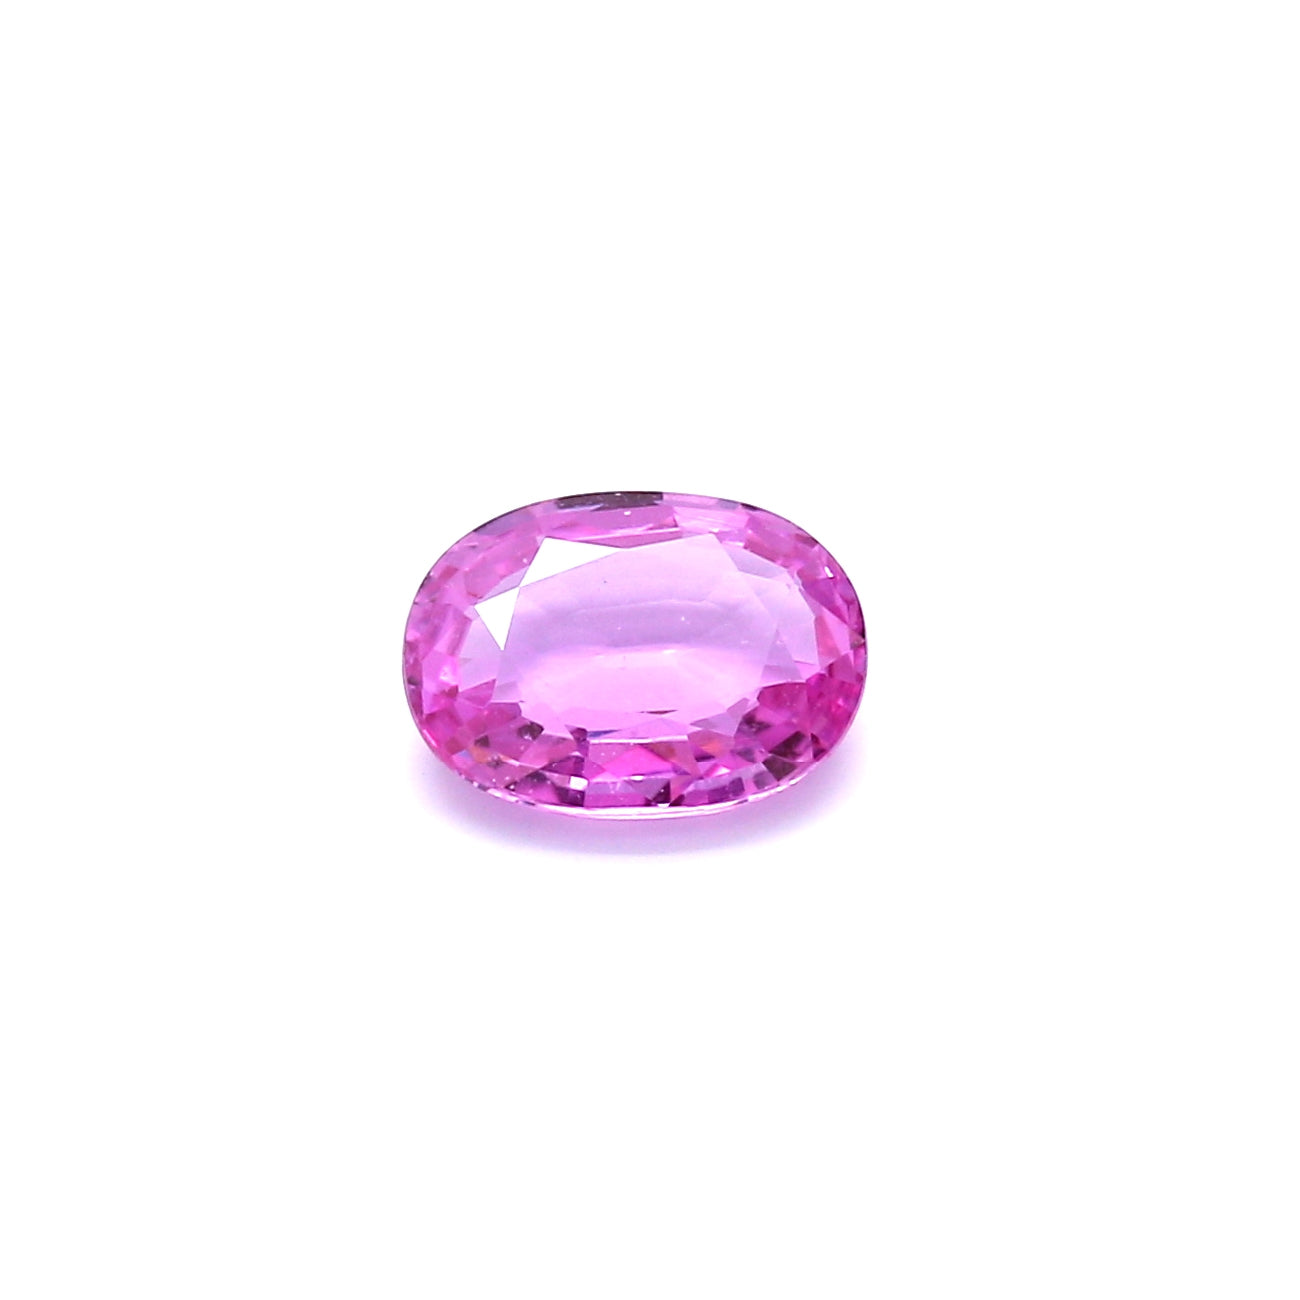 1.42ct Purplish Pink, Oval Sapphire, Heated, Madagascar - 8.11 x 6.12 x 2.84mm